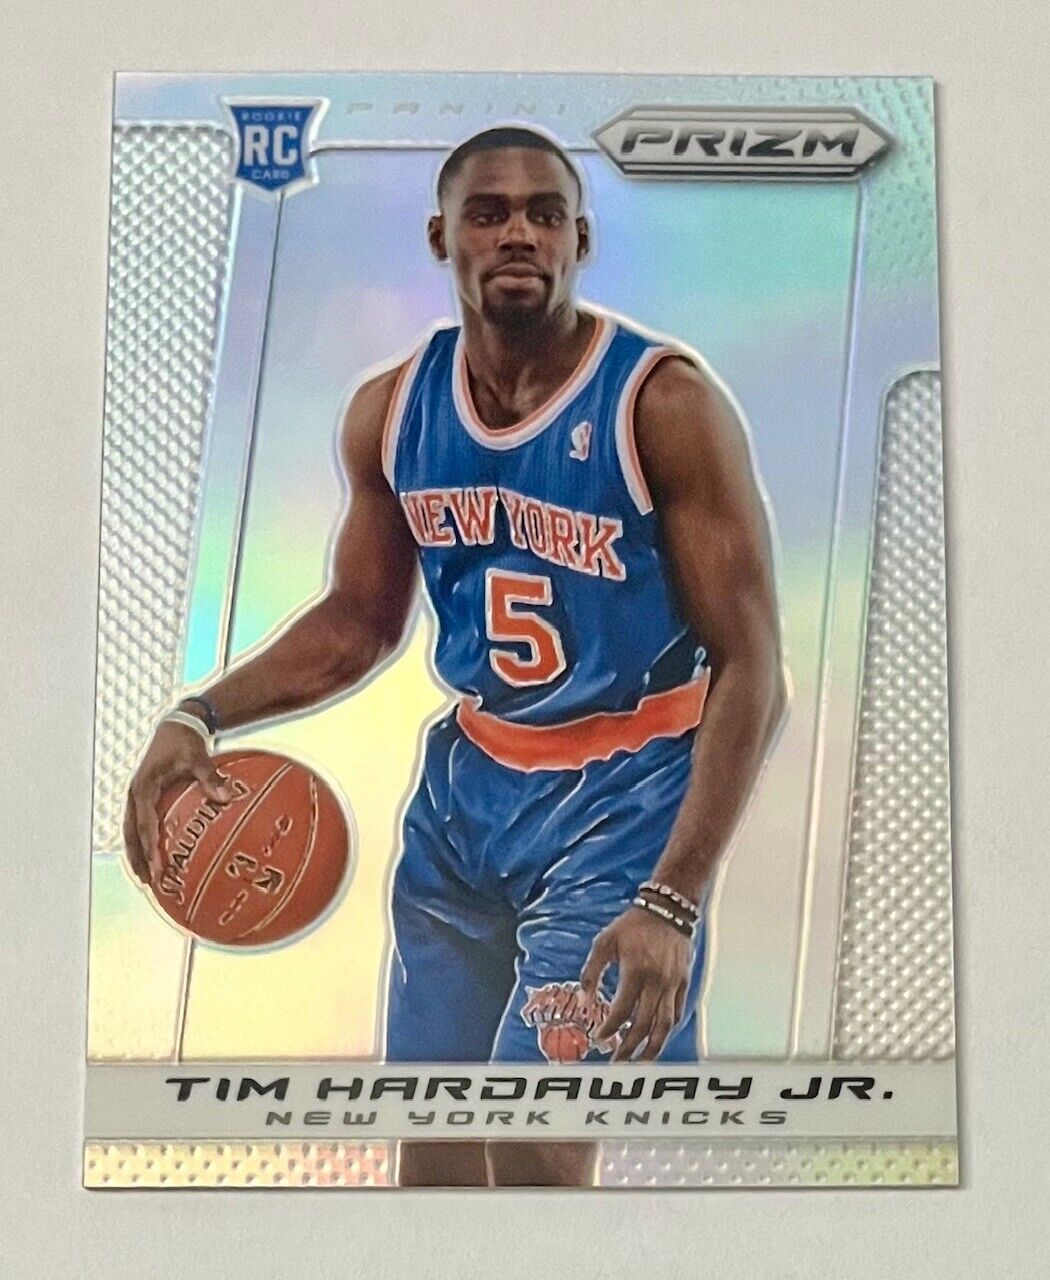 2013-14 Panini Prizm Tim Hardaway Jr. Silver Prizm Rookie #287 New York Knicks